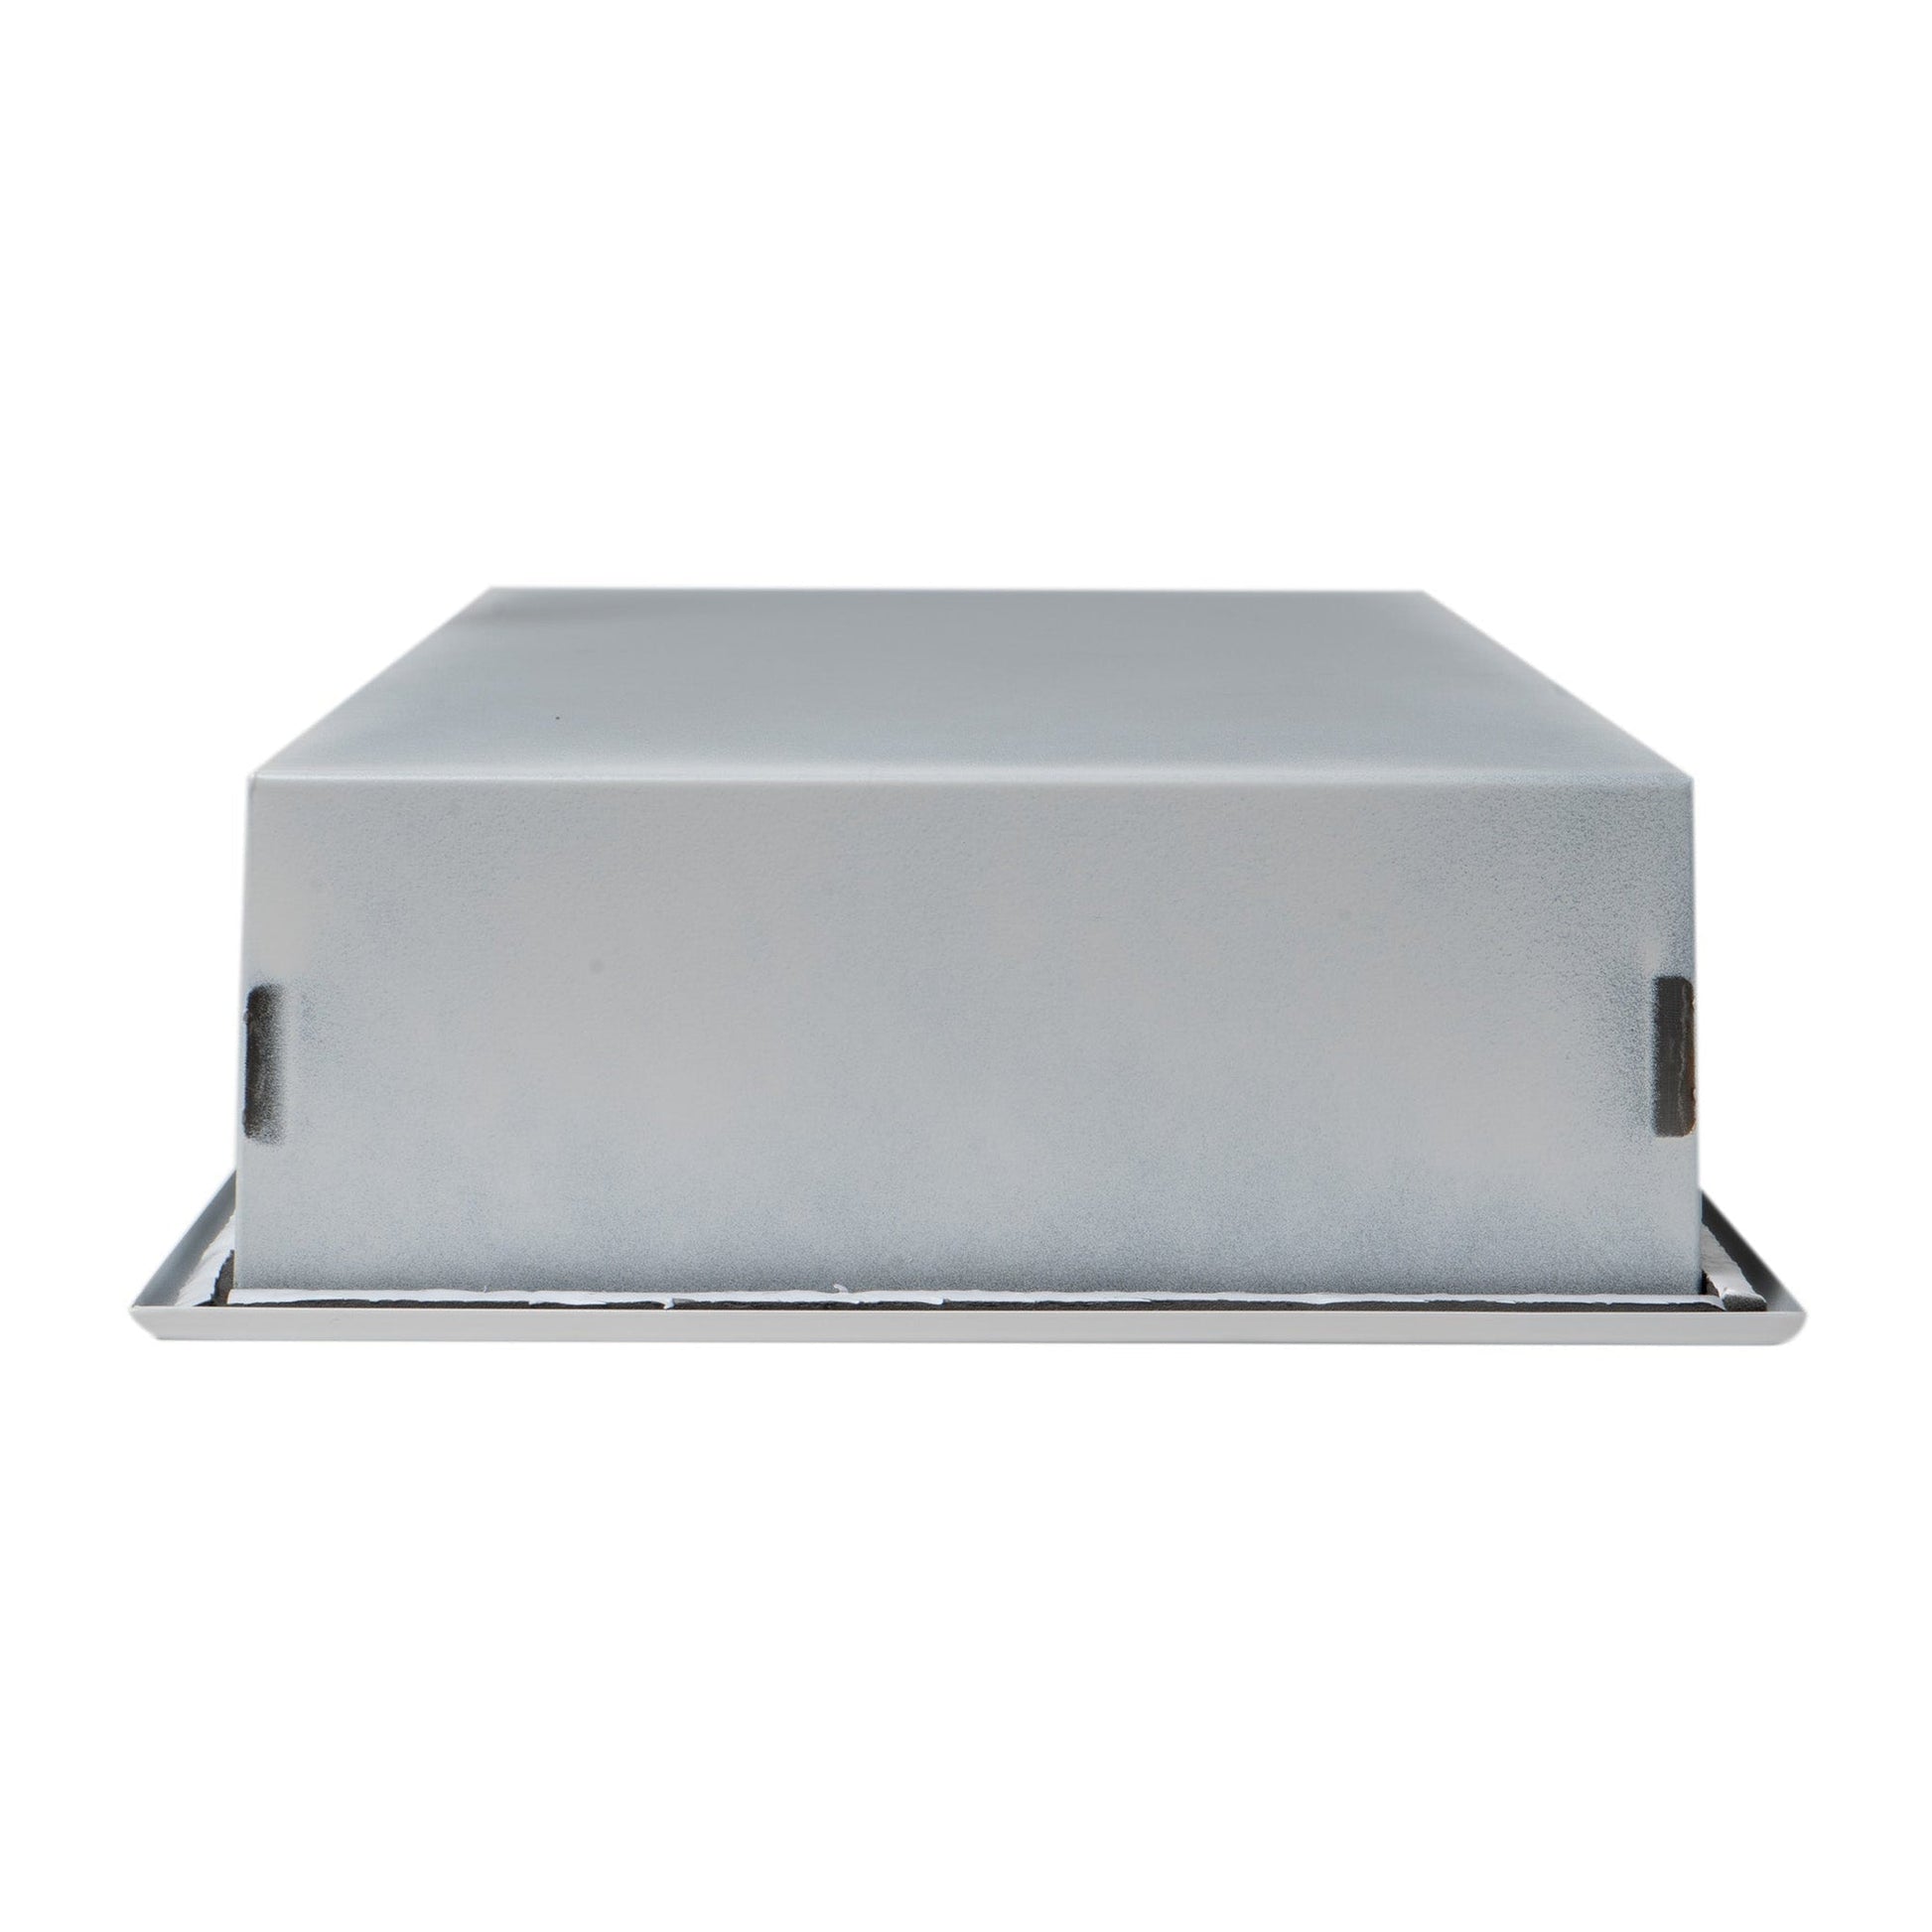 ALFI Brand ABNC2412-W 24" x 12" White Matte Stainless Steel Rectangle Horizontal Single Shelf Bath Shower Niche